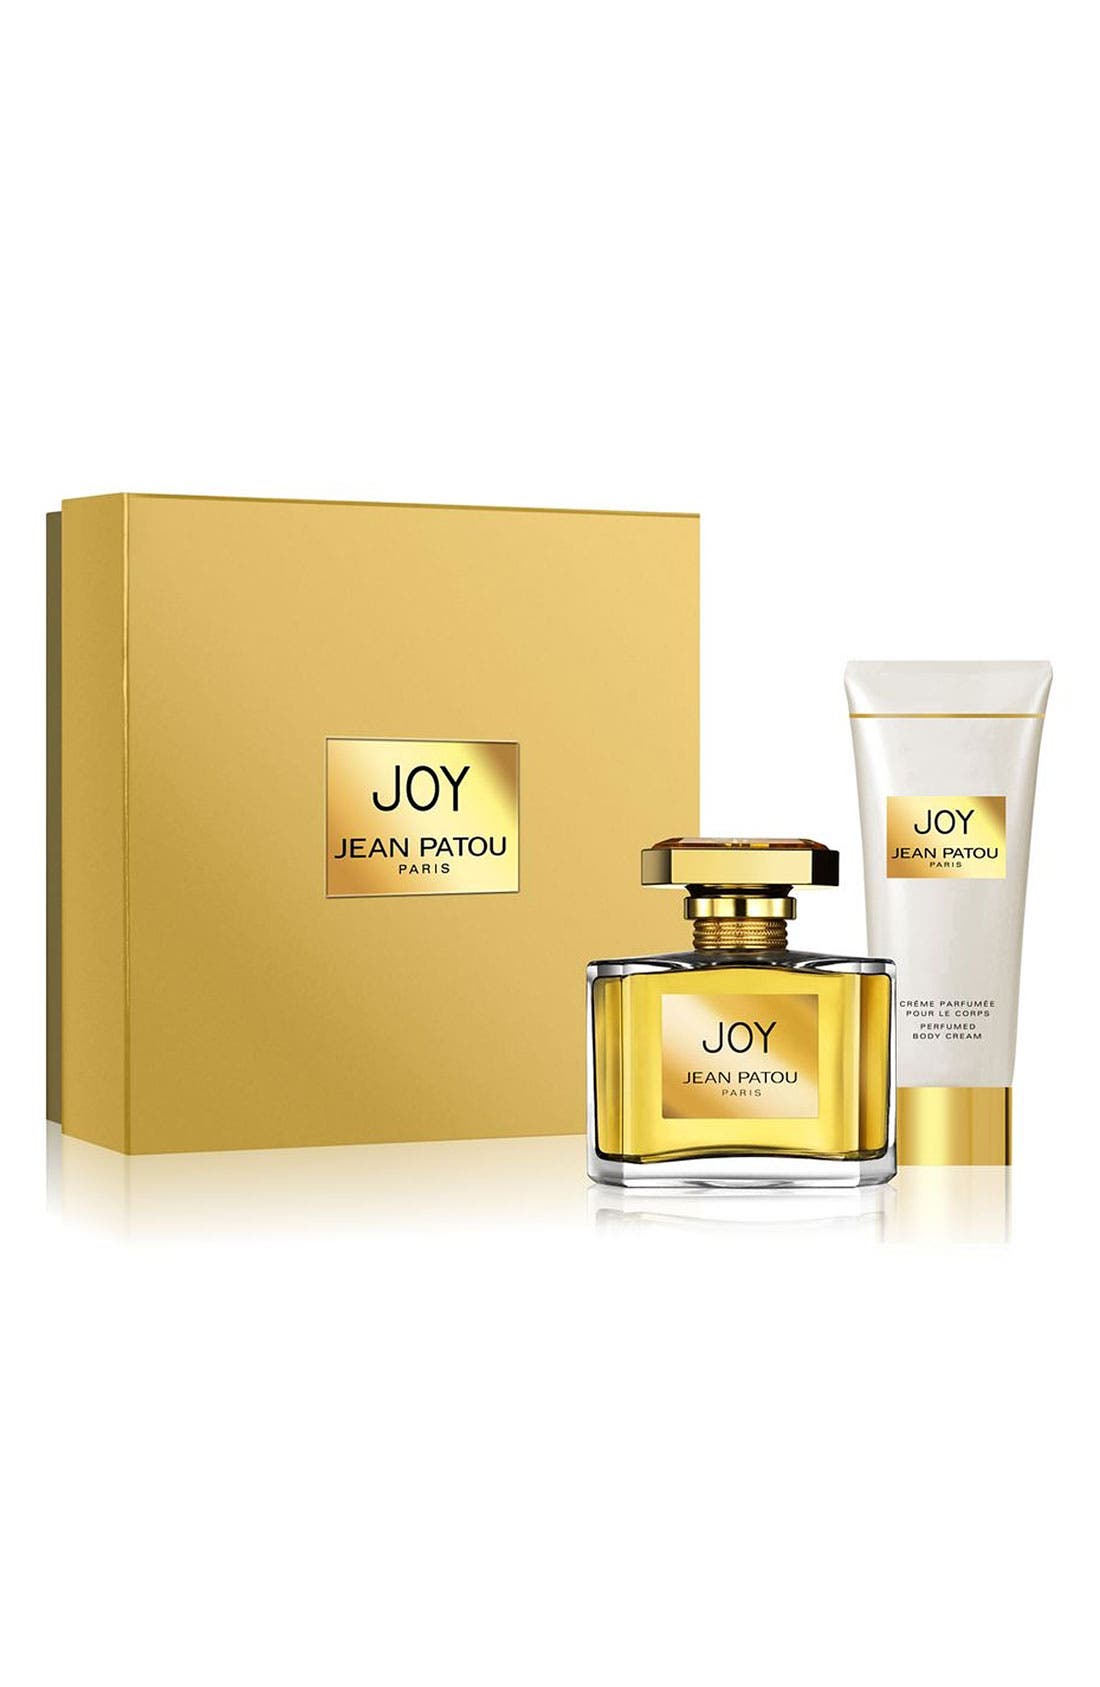 nordstrom joy perfume